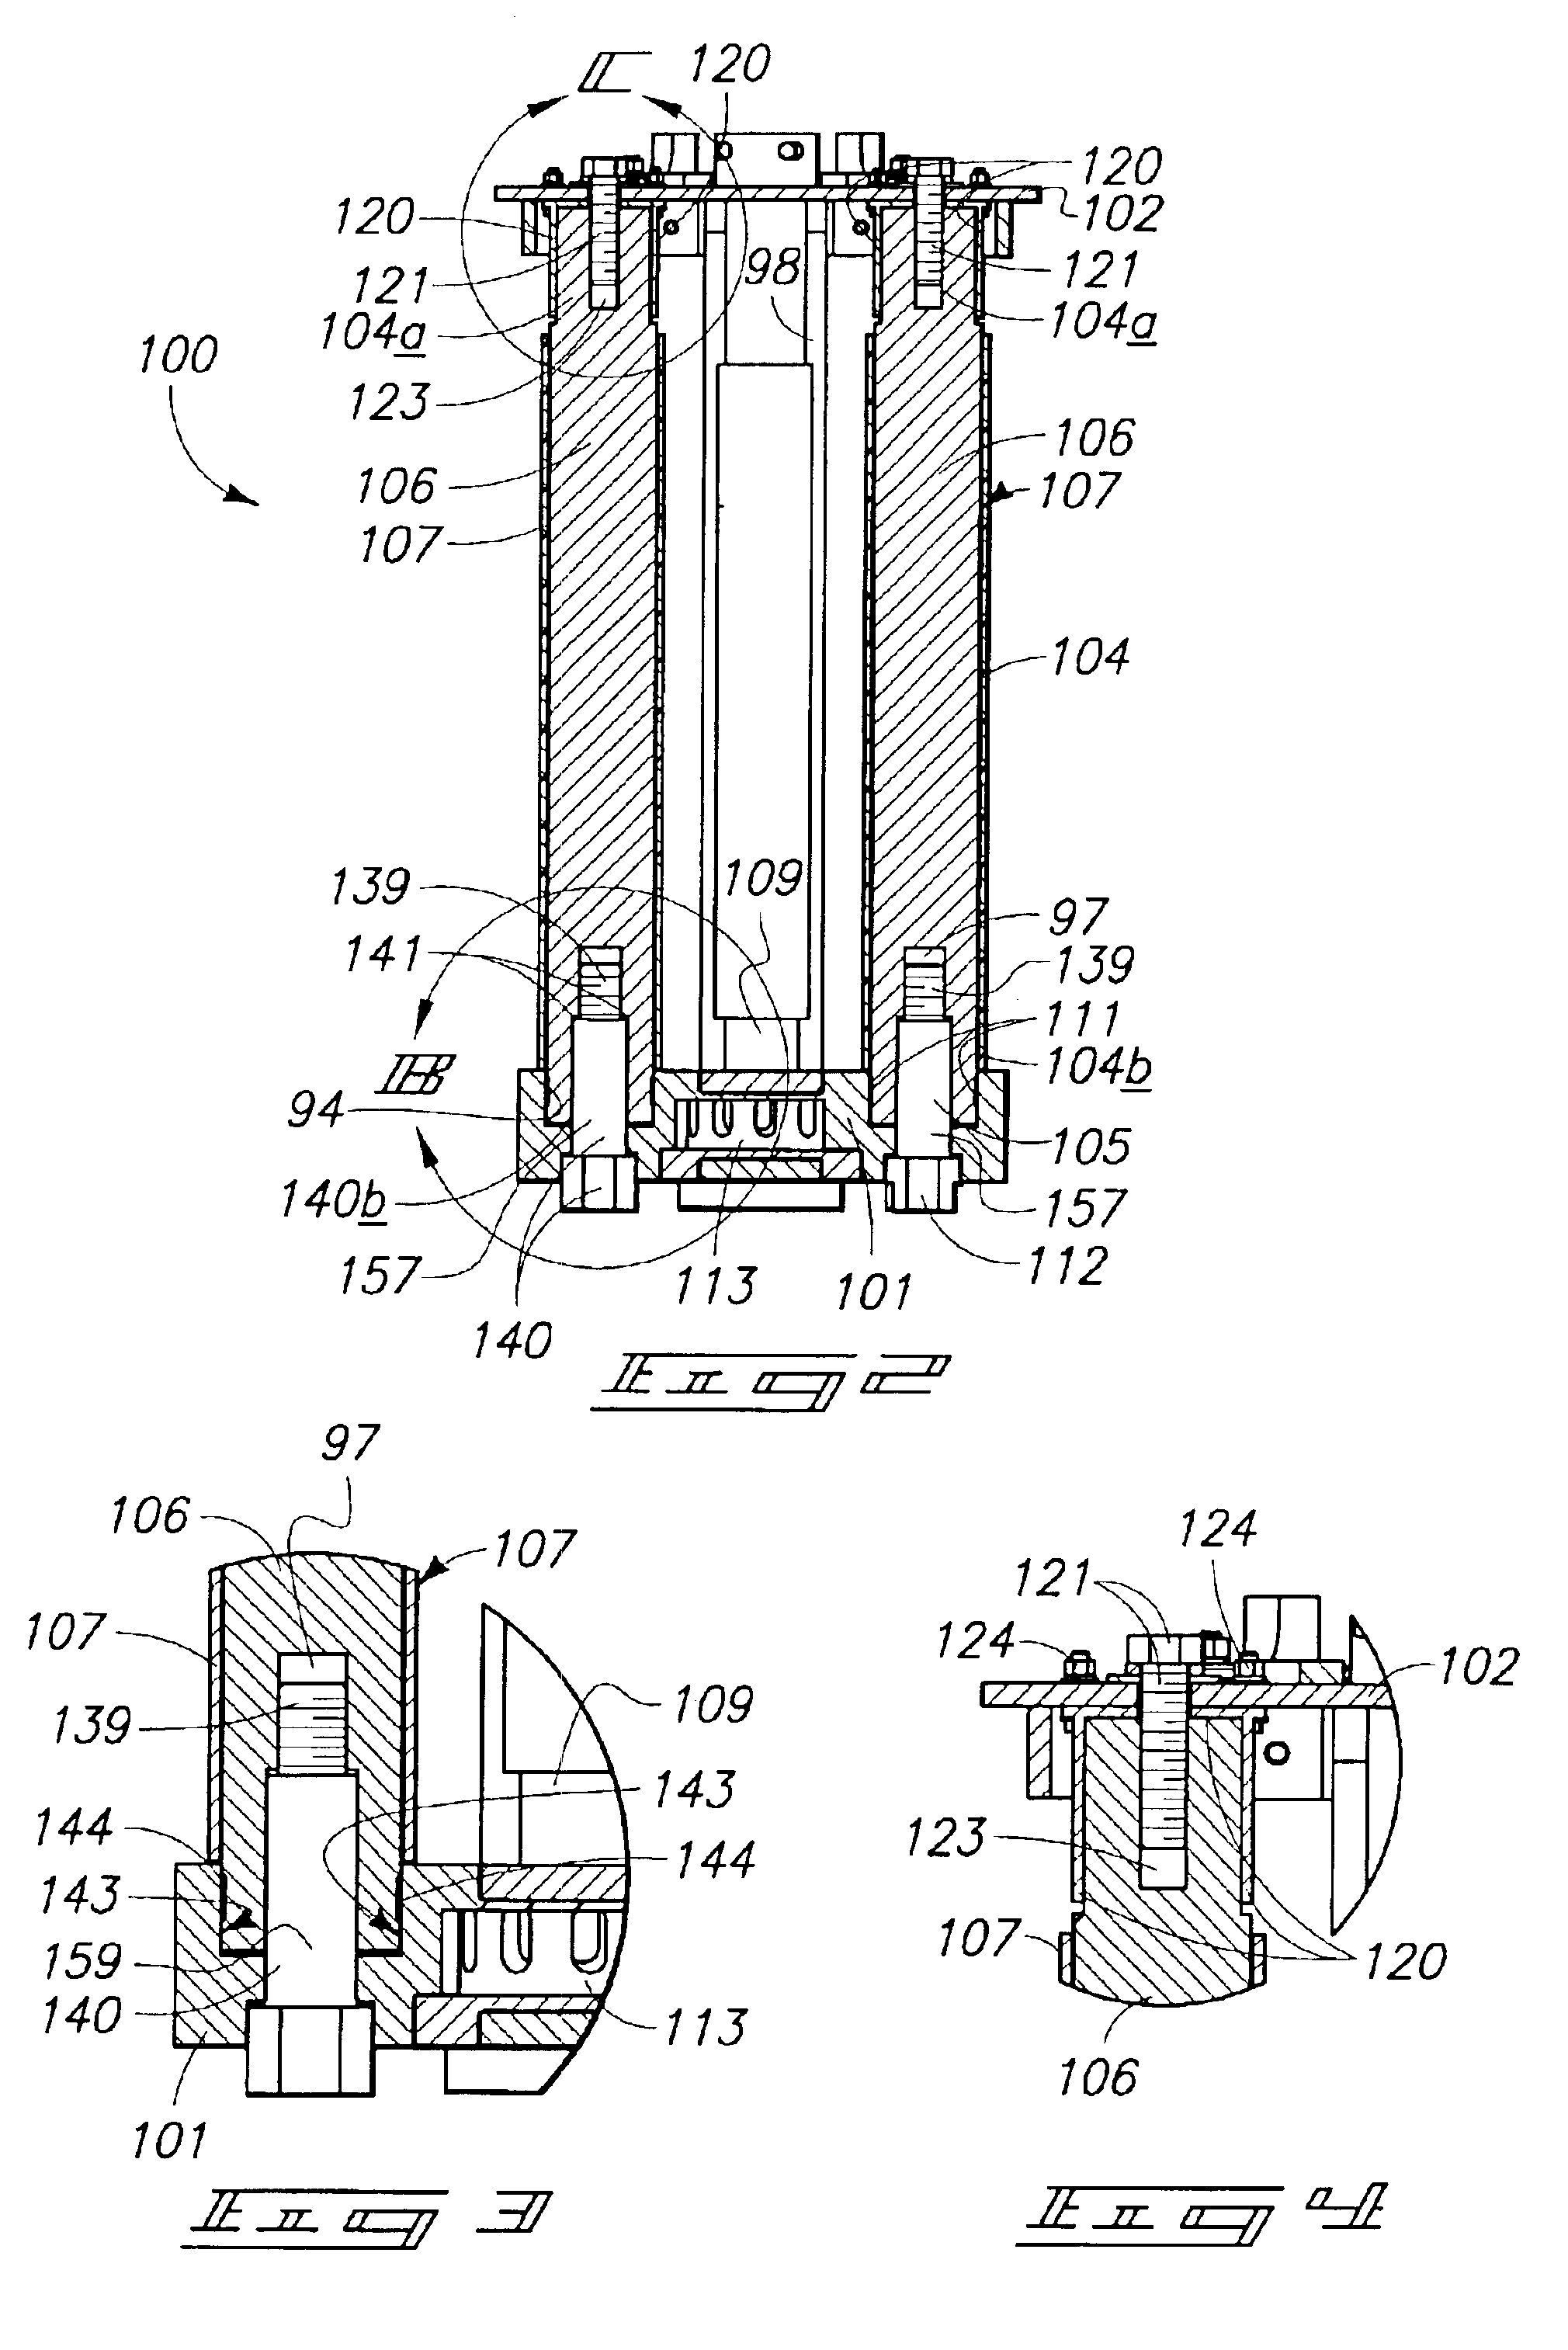 Molten metal pump system